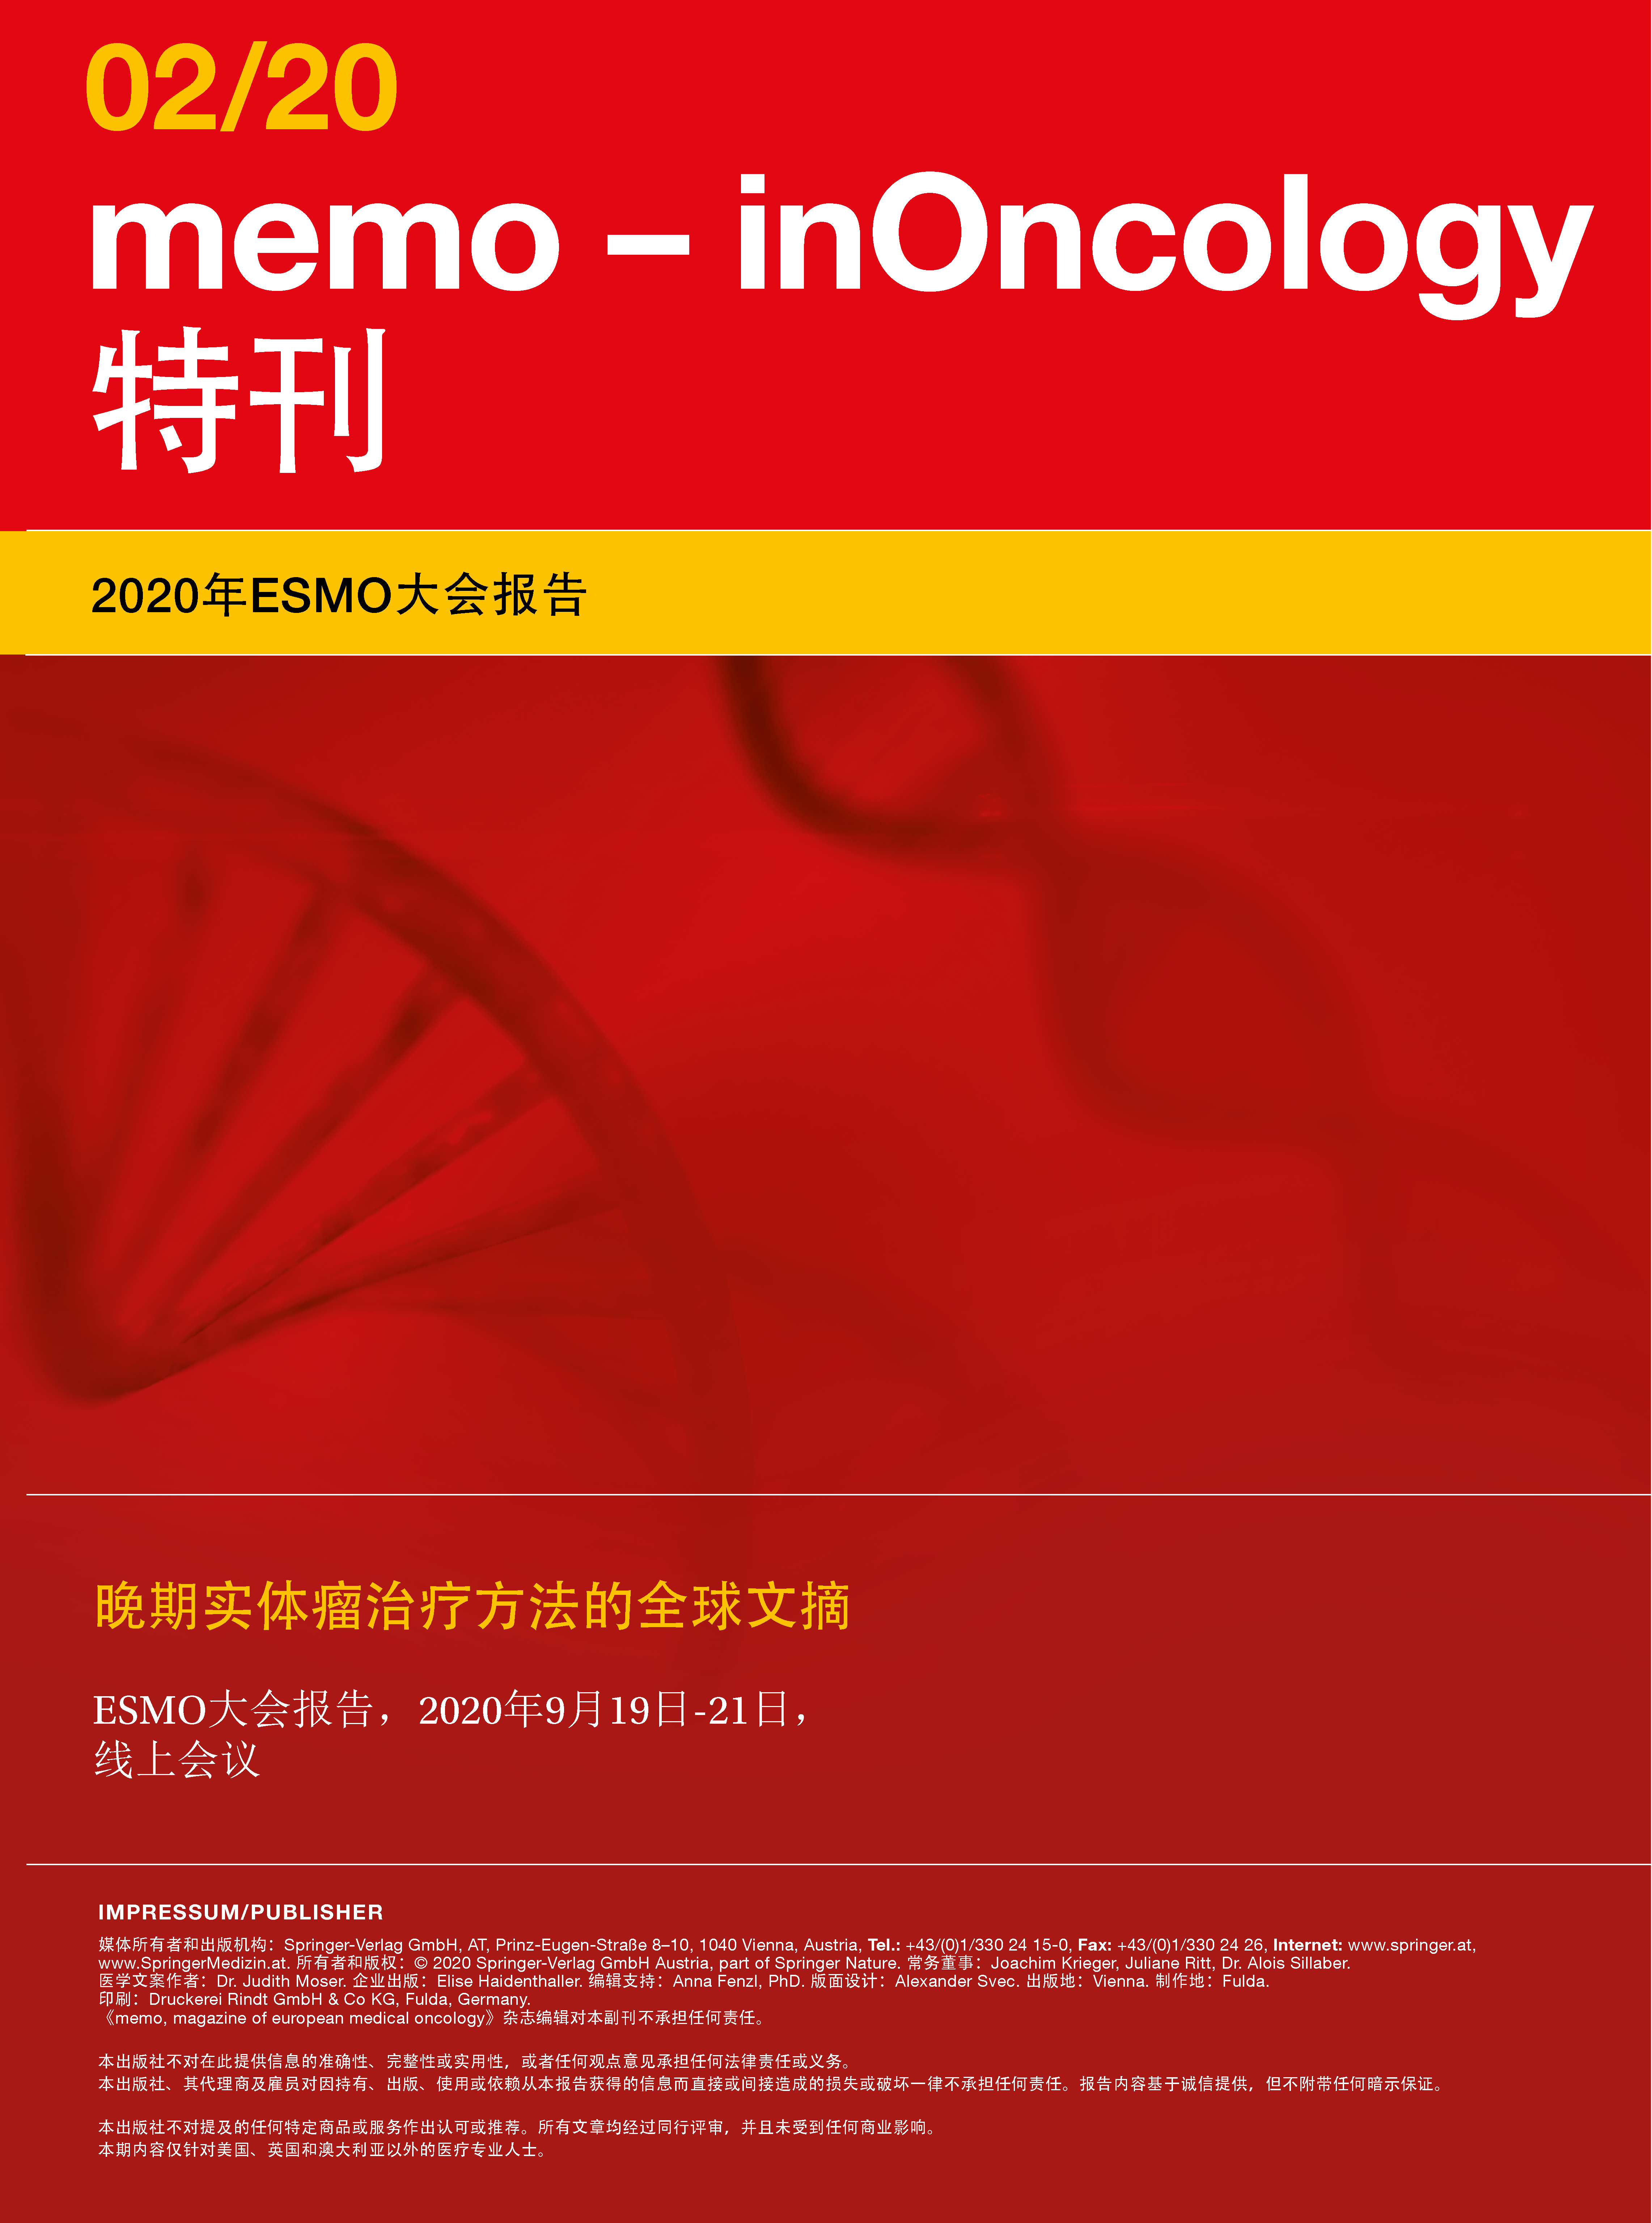 ESMO 2020 Solid Tumors Mandarin